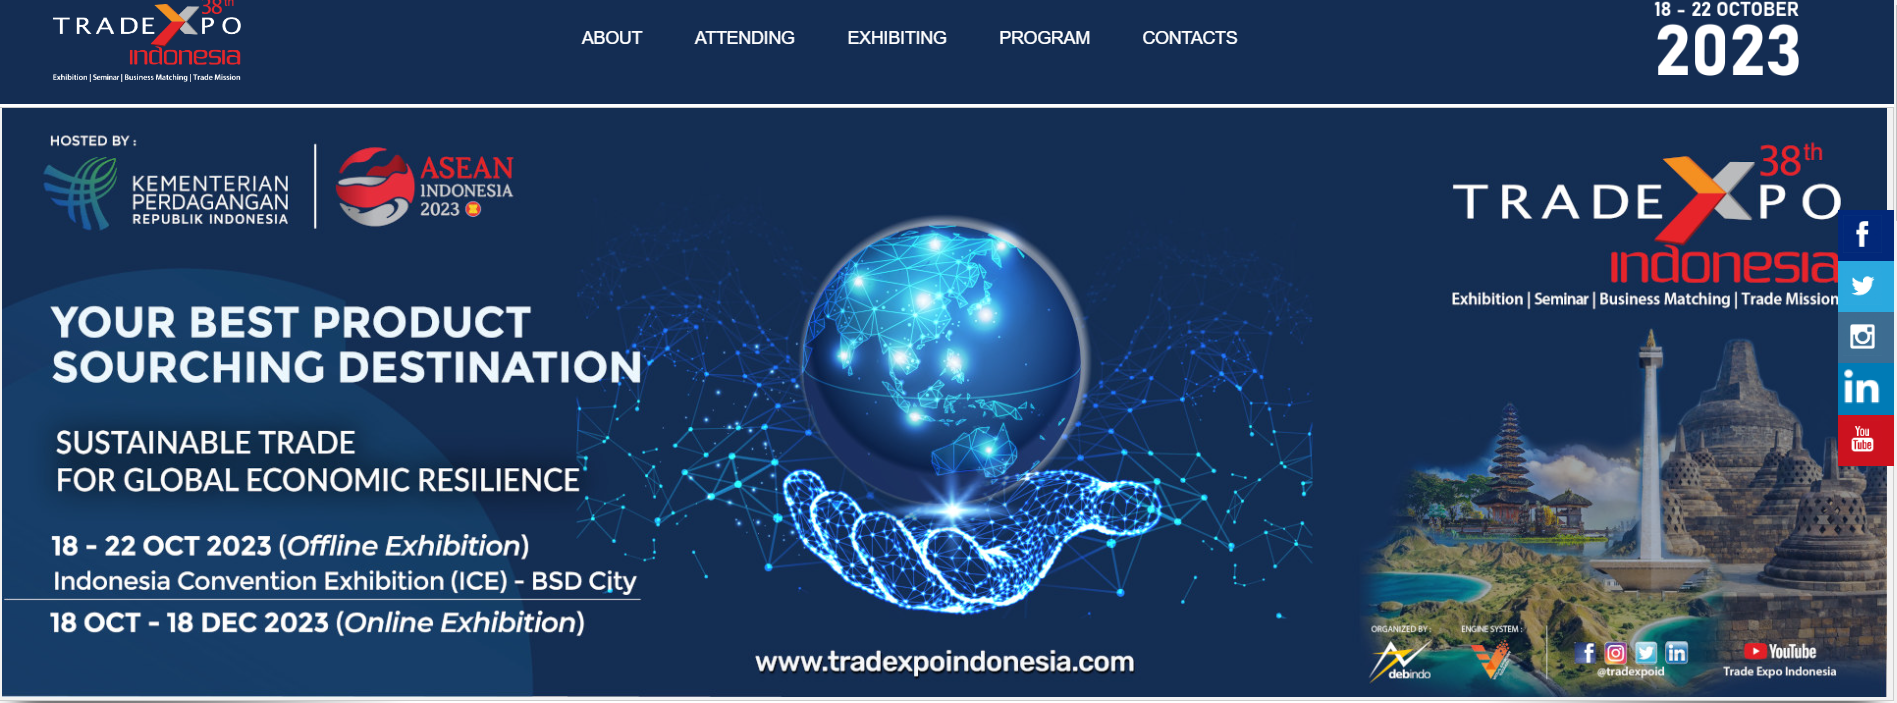 Foto Event Trade Expo Indonesia 2023